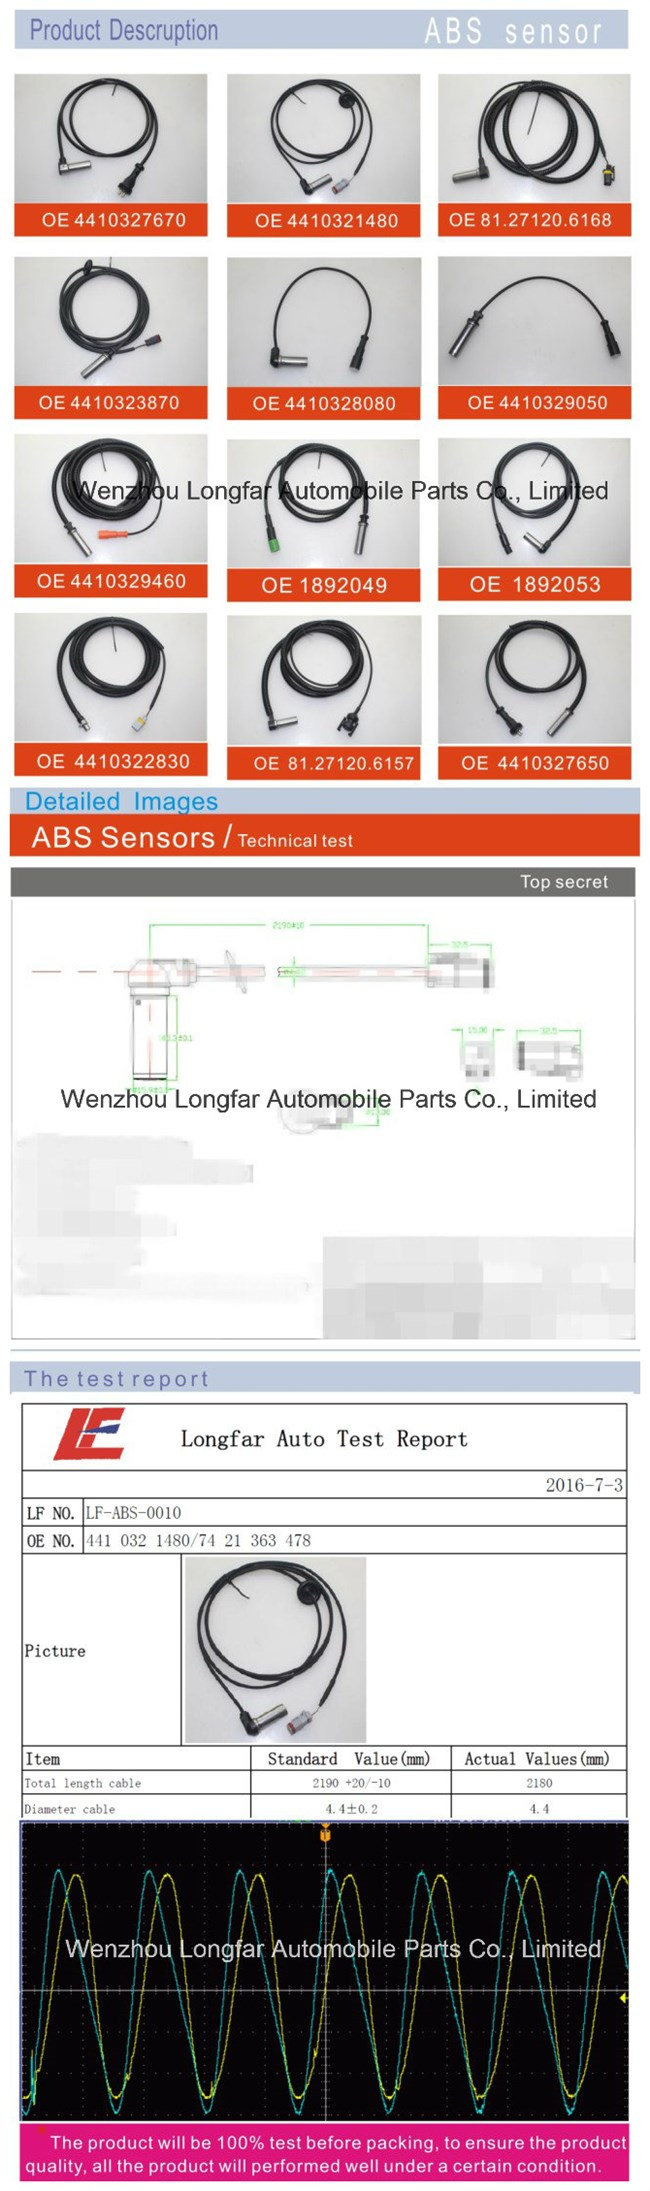 Auto Truck ABS Sensor Anti-Lock Braking System Transducer Indicator Sensor 5010422022, 6.61903, 0486000072000, 85-50520-Sx, 096.359, 75720 for Renault, Dt